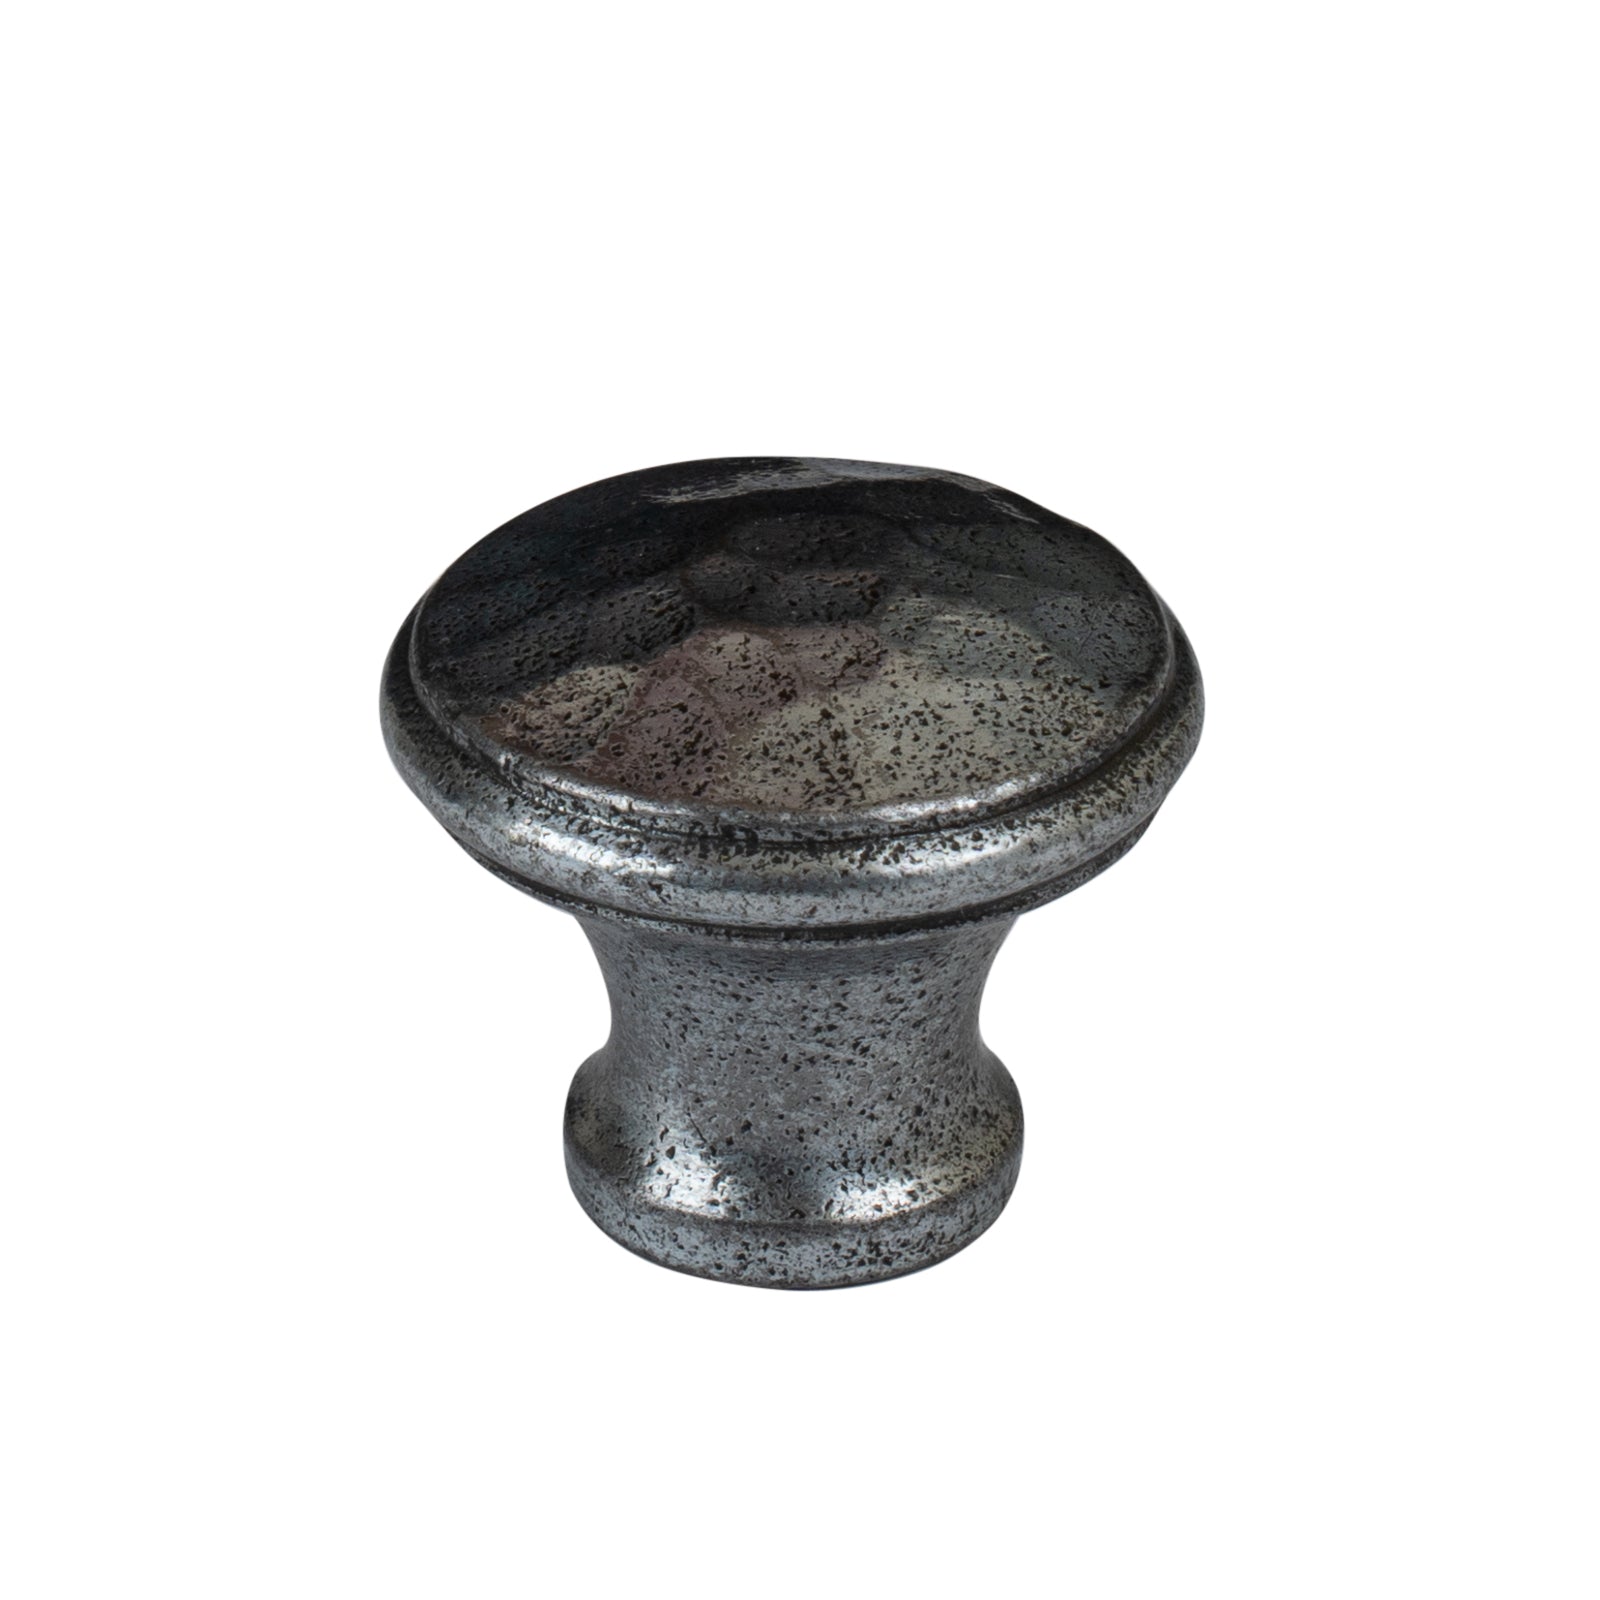 cast iron cupboard knob with petwer finish